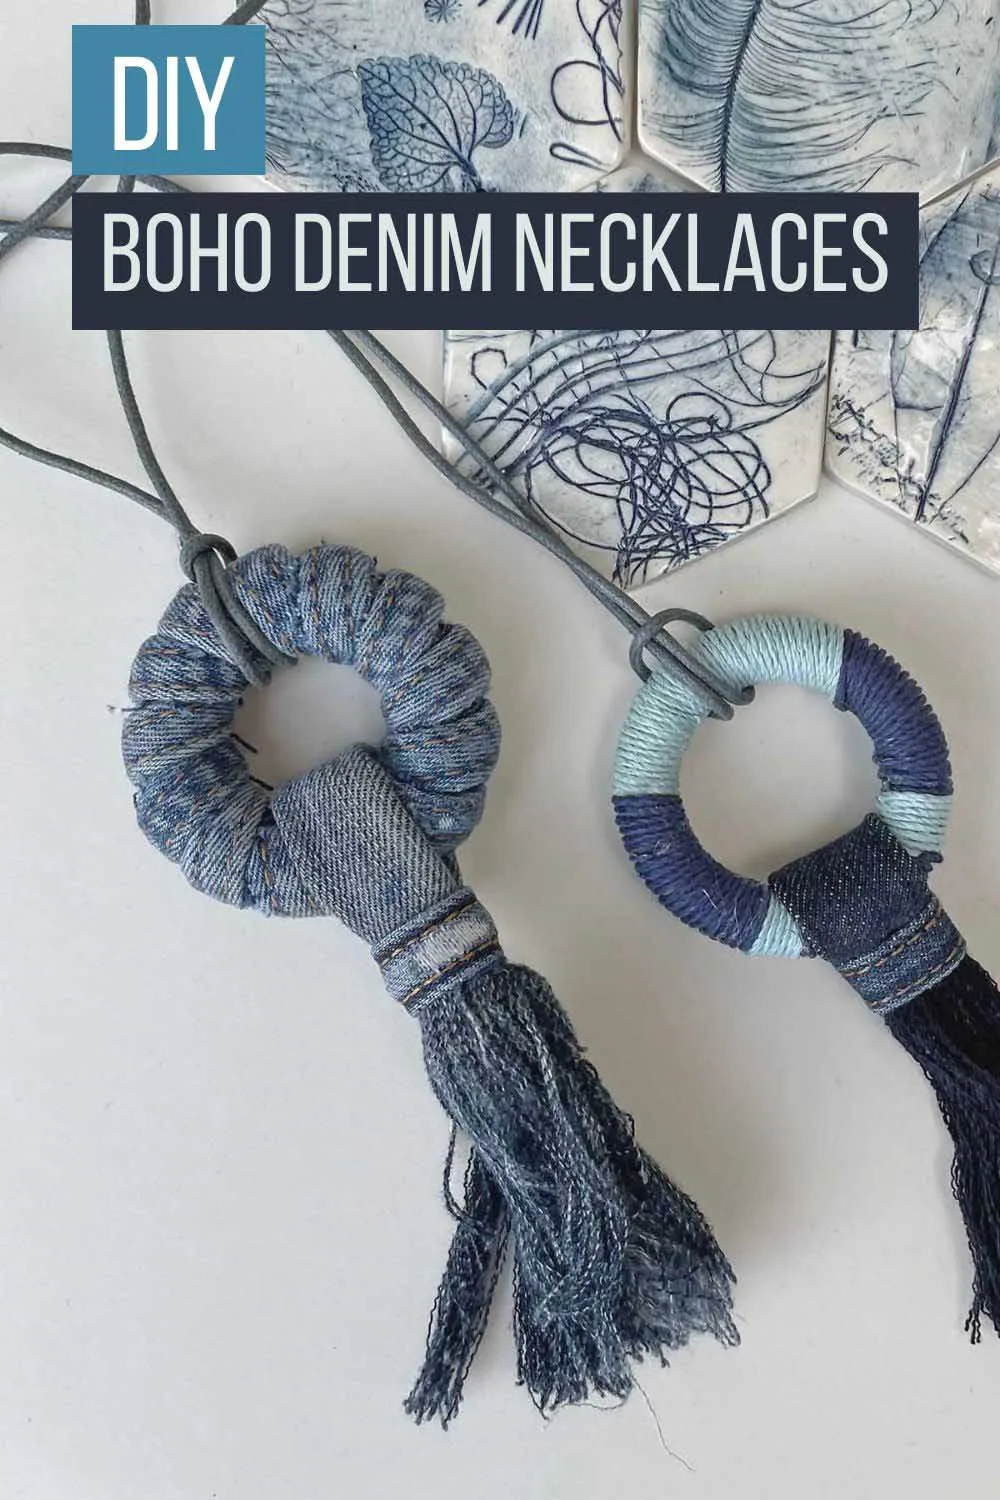 DIY boho denim necklaces pin